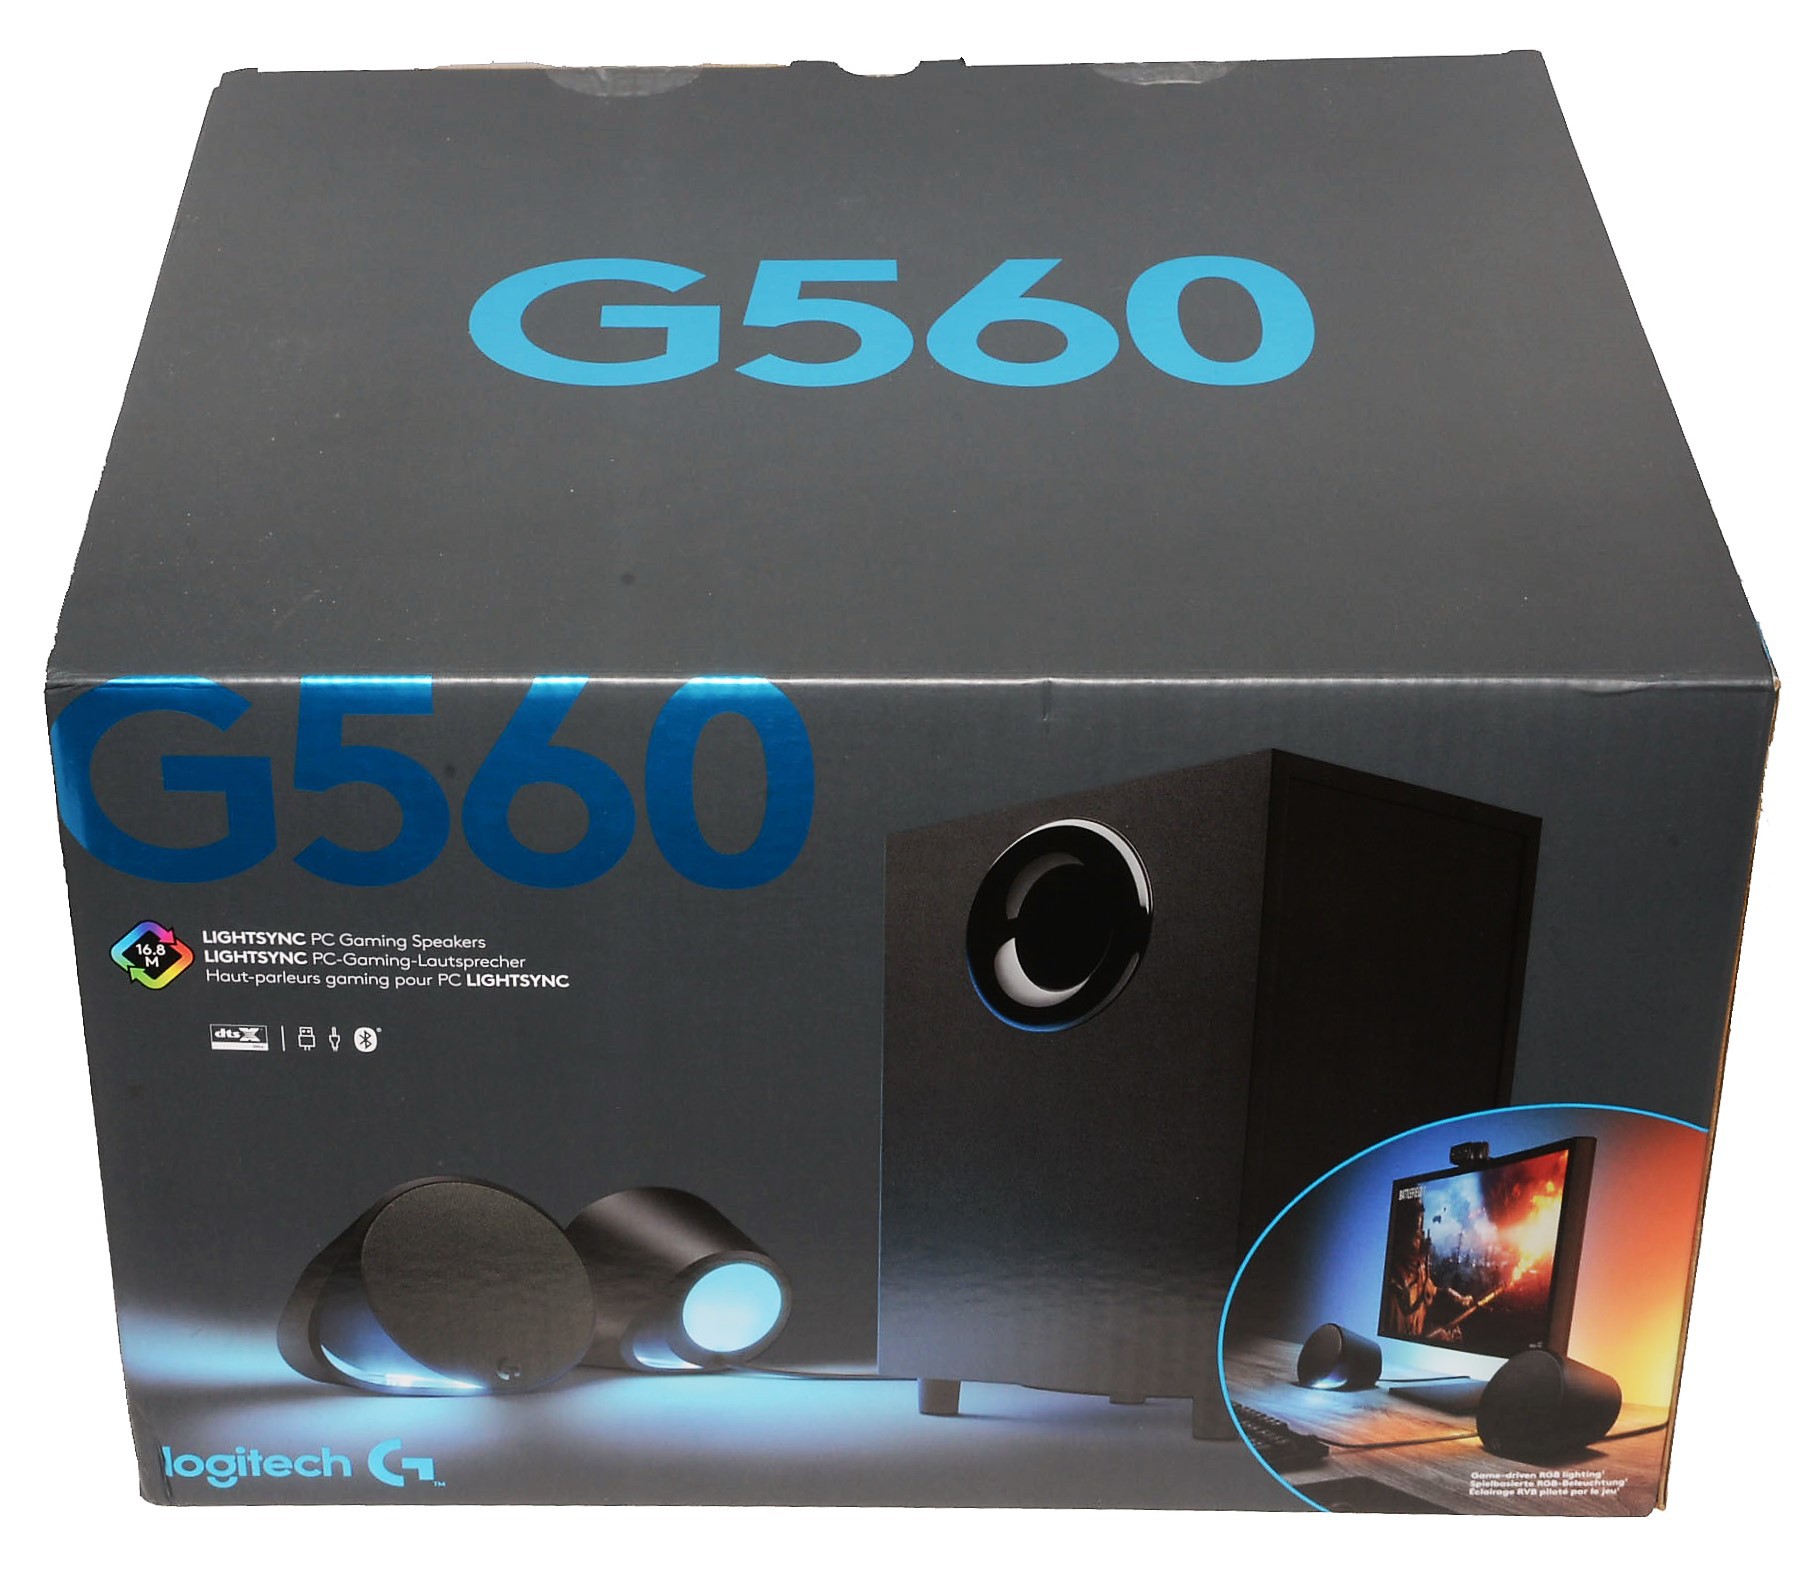 Parlante Logitech G560 RGB Lightsync para juegos en PC